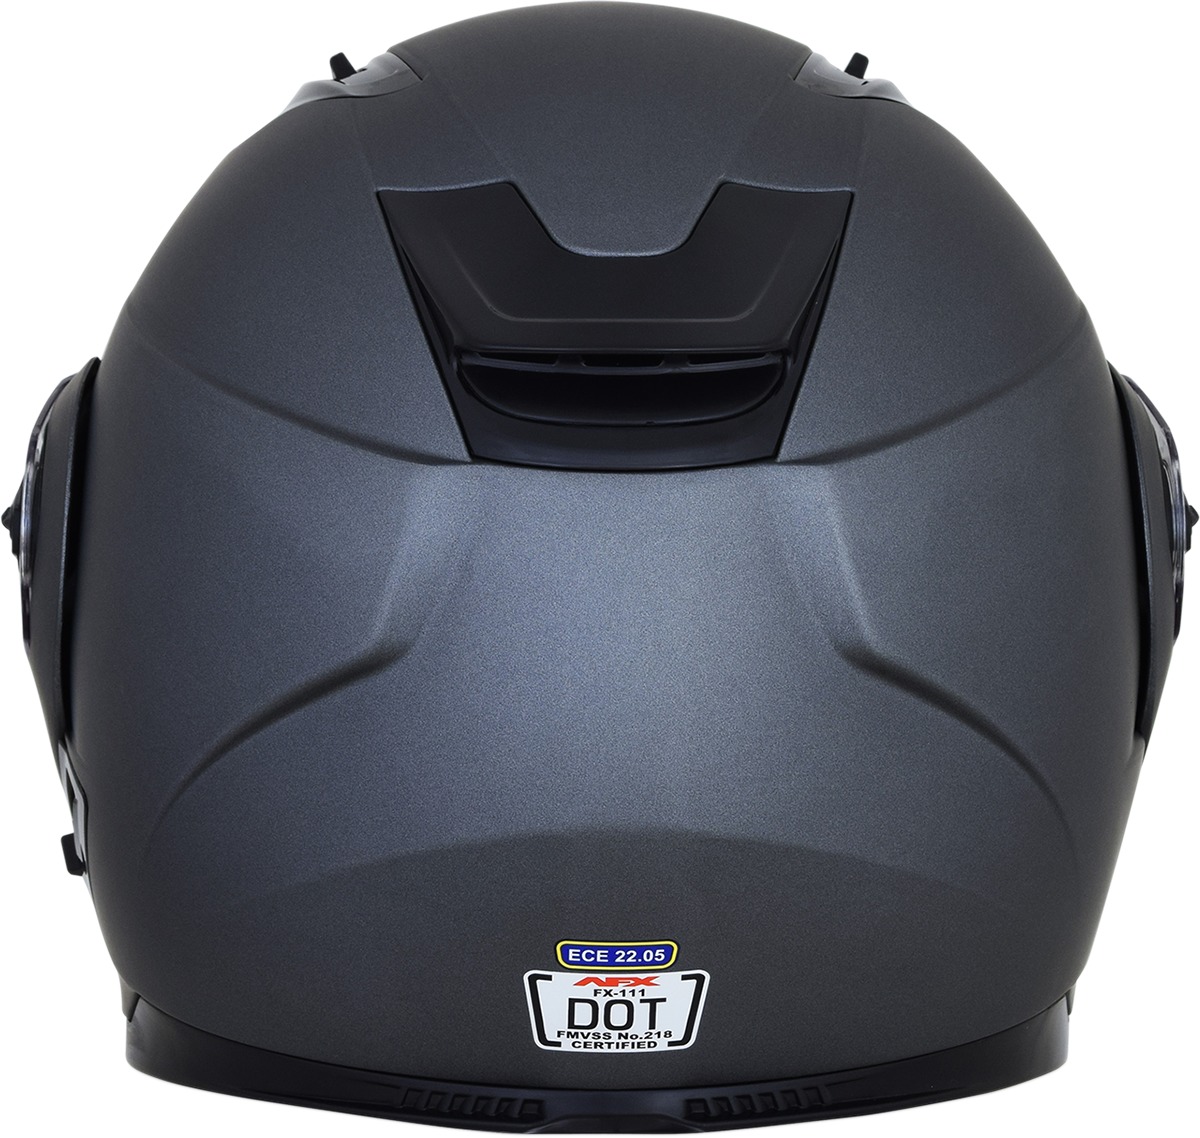 FX-111 Modular Street Helmet Gray 2X-Large - Click Image to Close